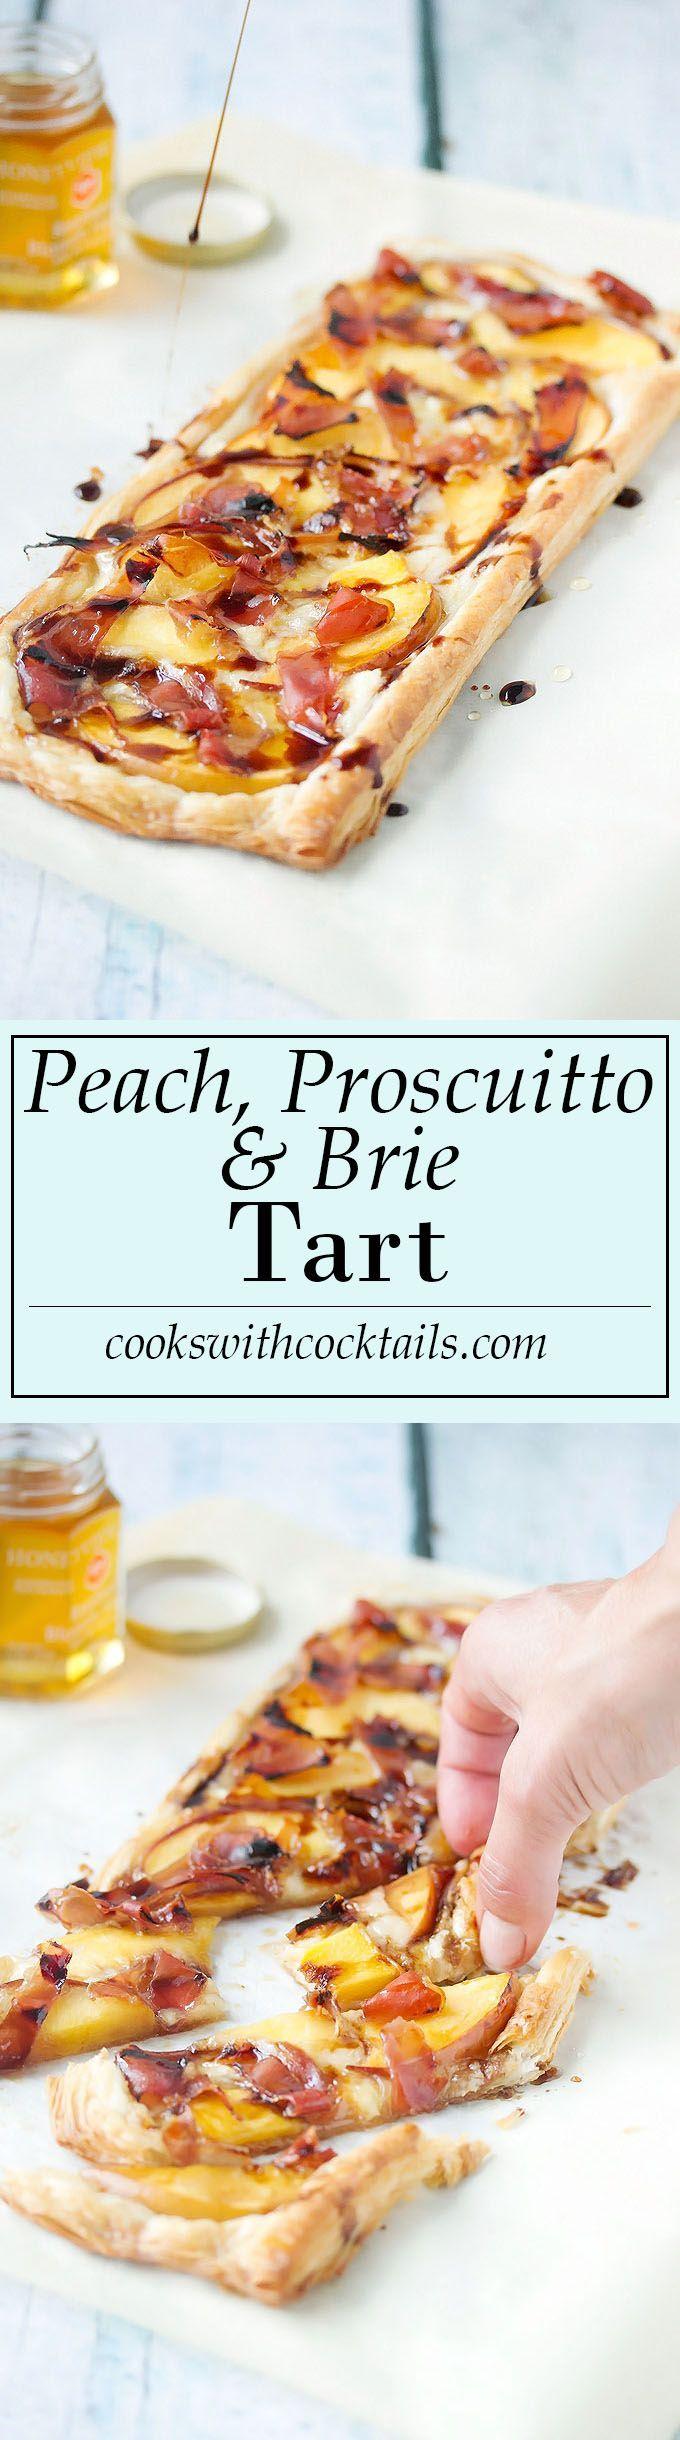 Wedding - Peach, Proscuito & Brie Tart